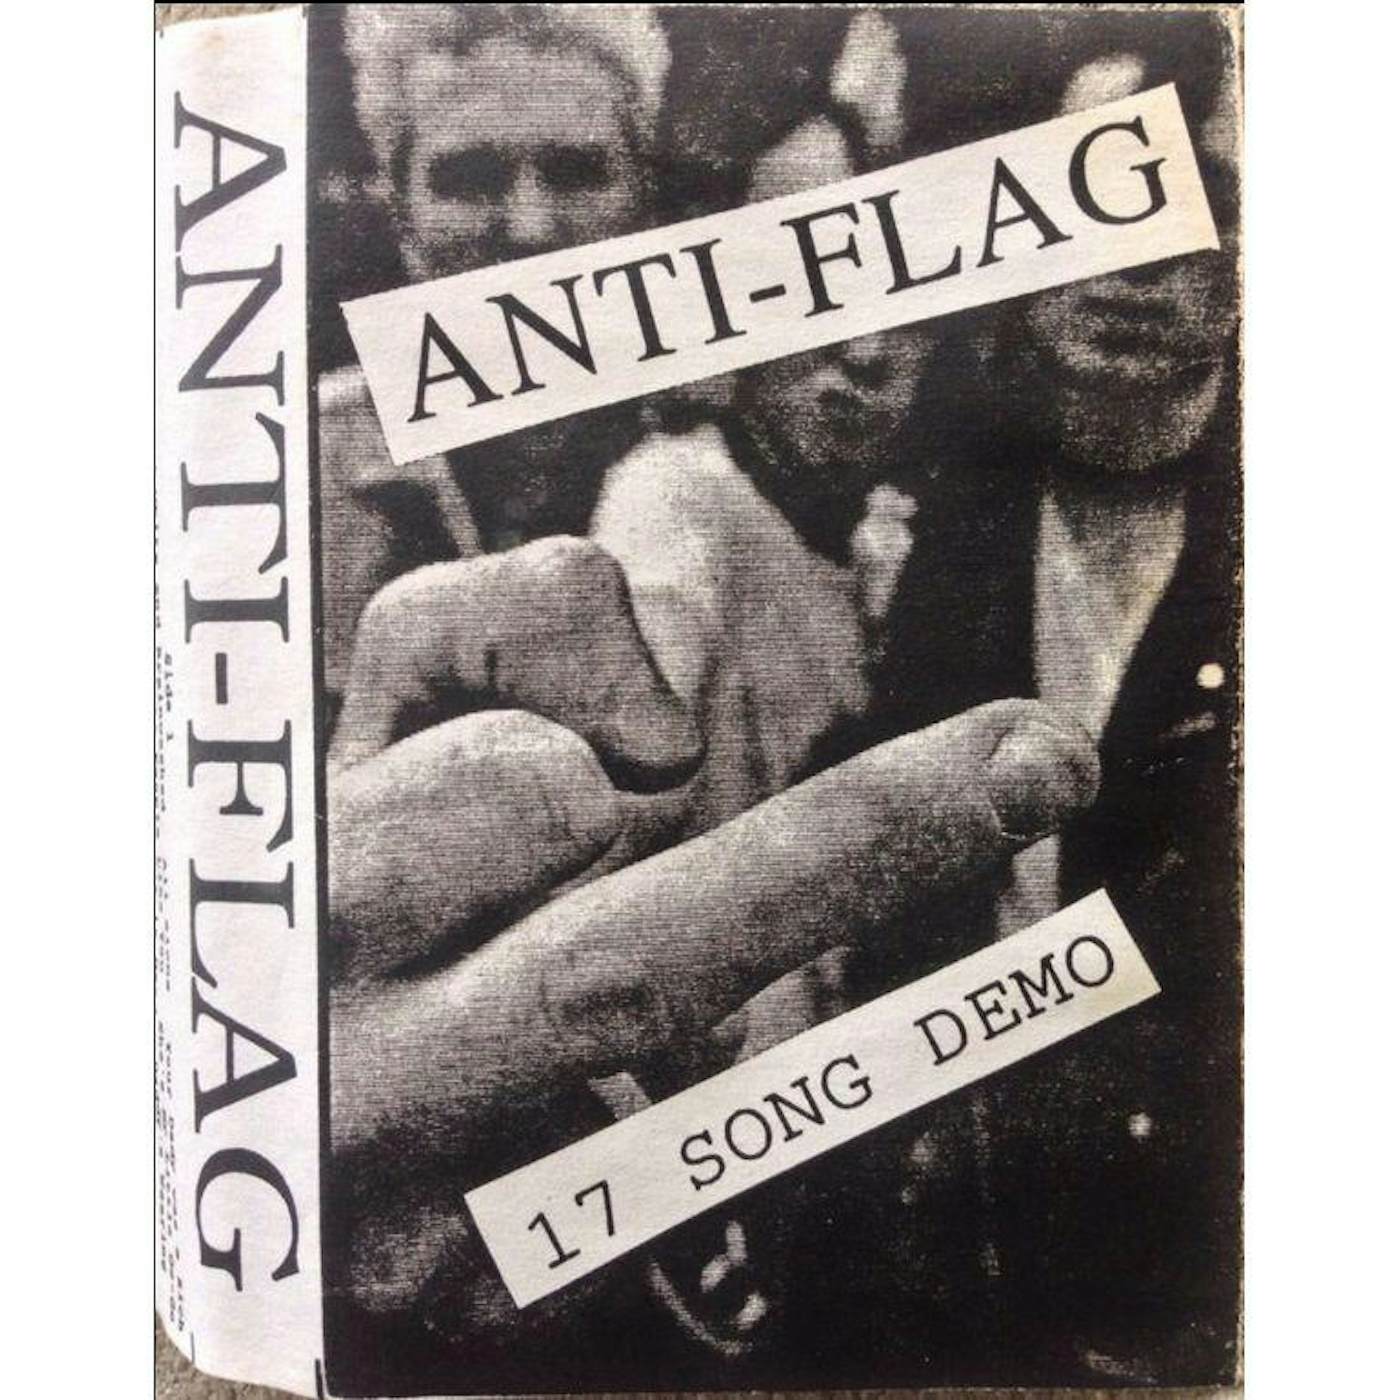 Anti-Flag 17 SONG DEMO CD